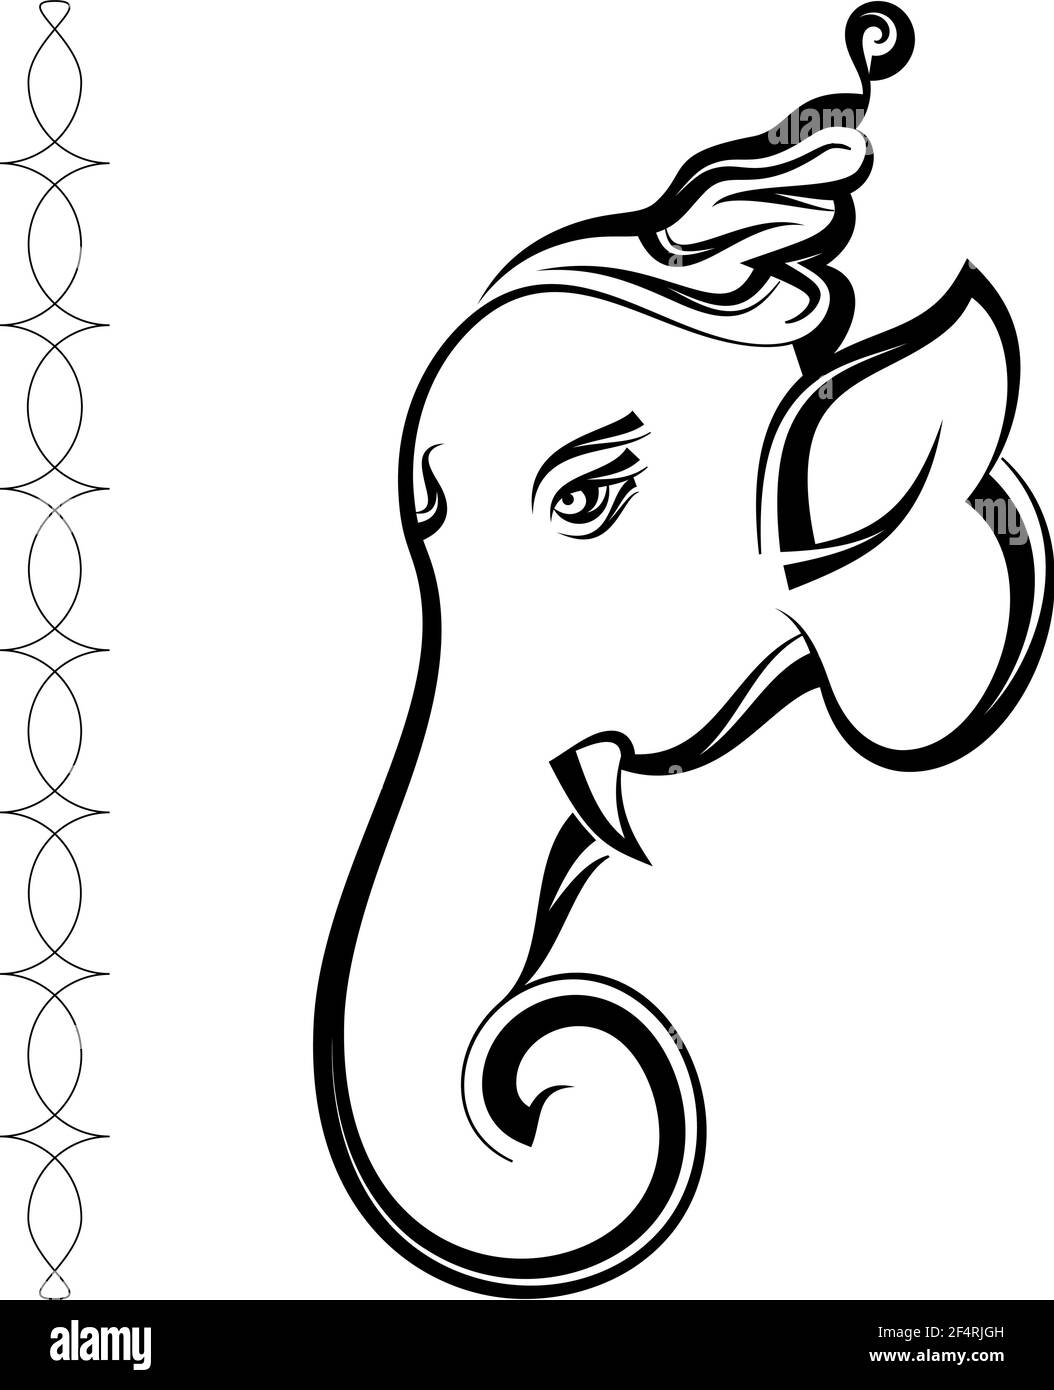 Ganesha Calligraphic Style Hand Drawn Design Vector Art ...